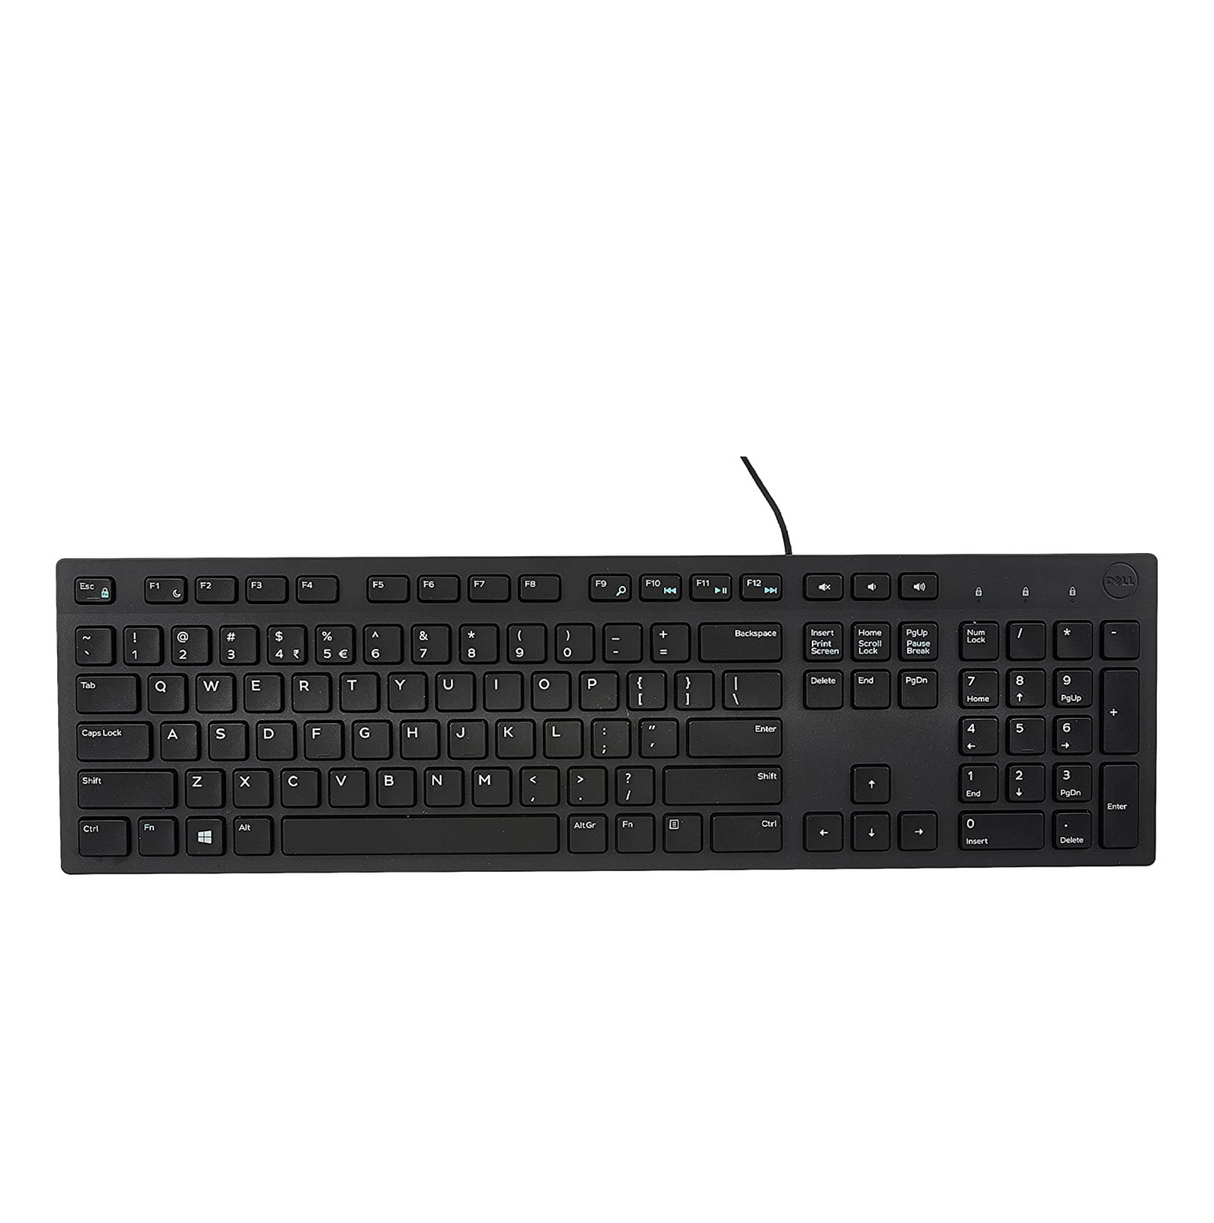 Dell KB216 Wired Multimedia USB Keyboard (refurbished)